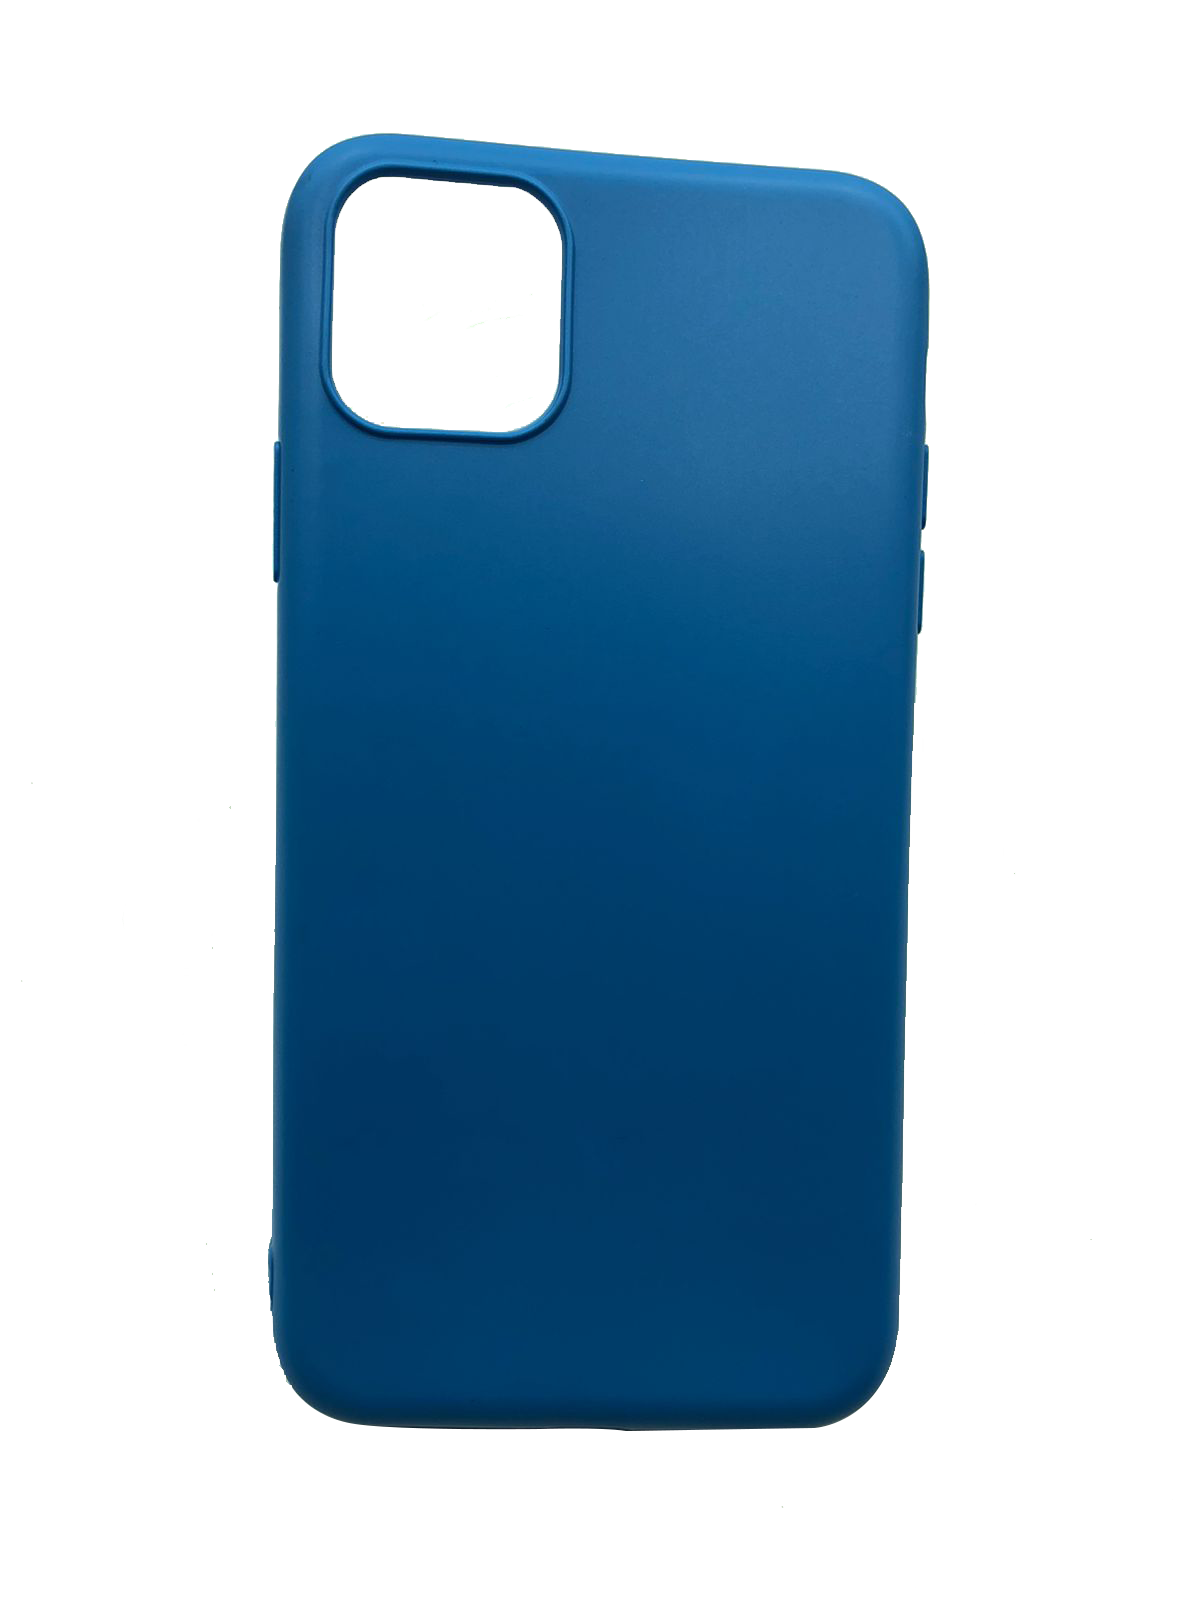 Silicone Case iPHONE 11 PRO MAX  BLUE